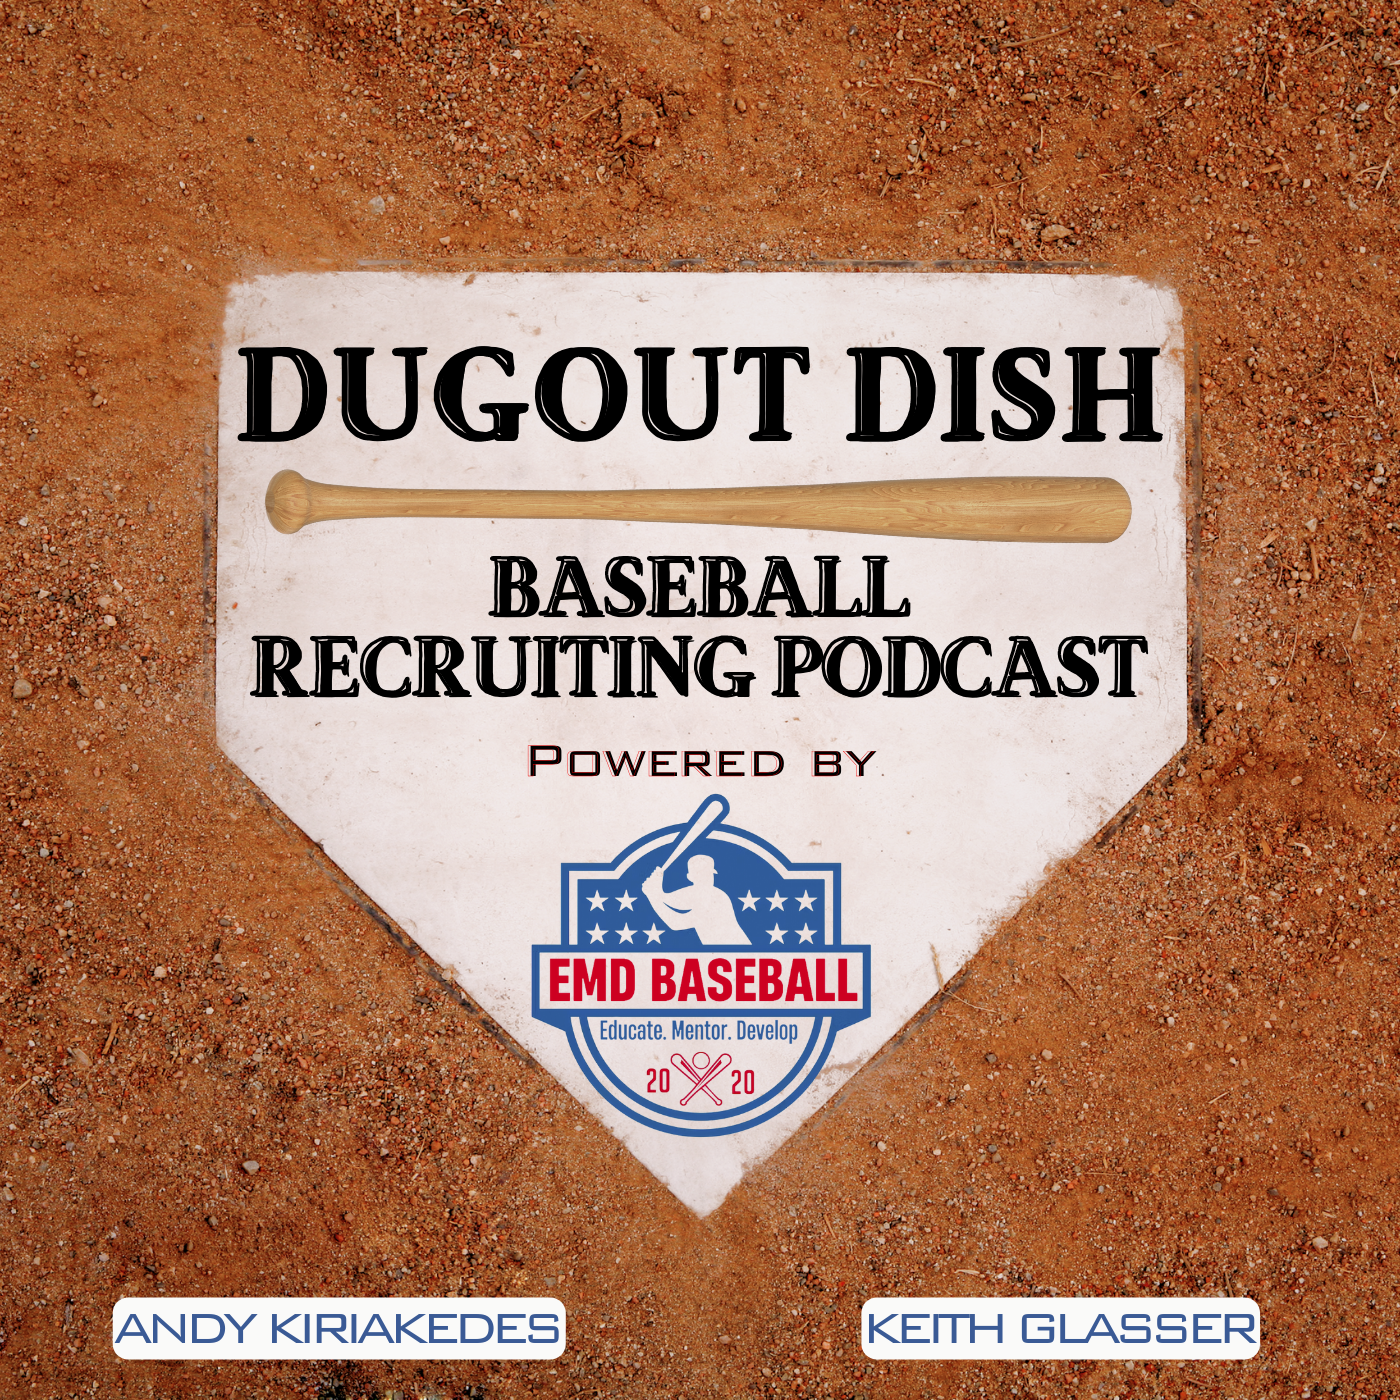 Dugout Dish Baseball Recruiting Podcast powered by EMD Baseball